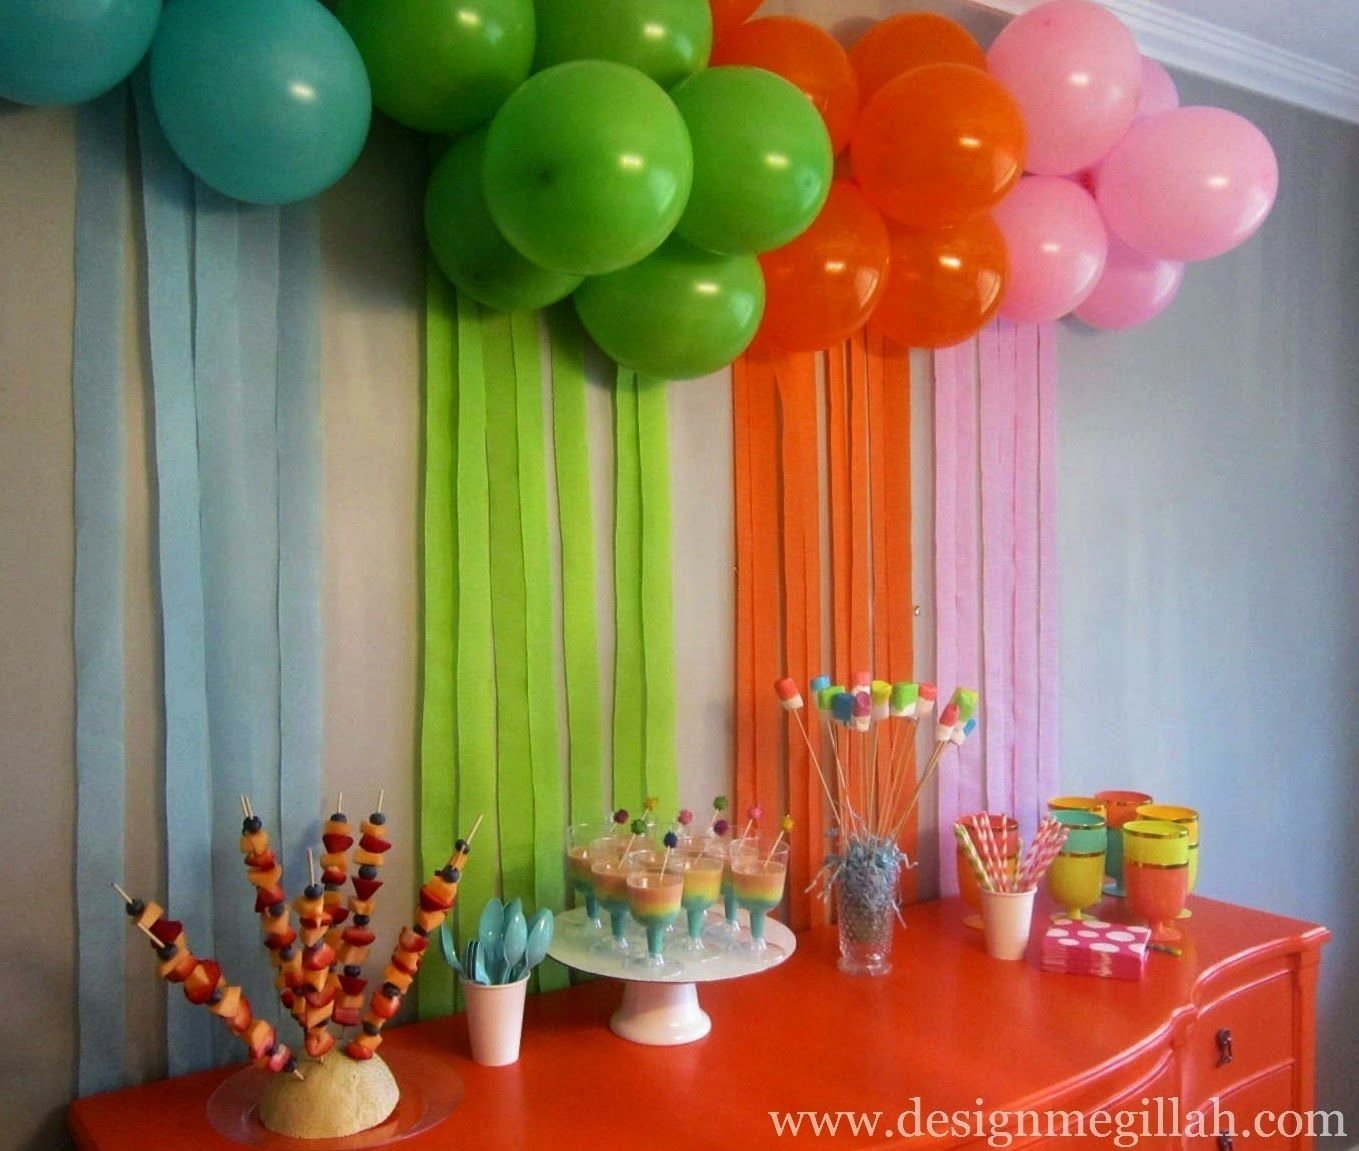 10 Unique Birthday Party At Home Ideas bday decoration ideas at home simple decorating party and supplies 1 2022